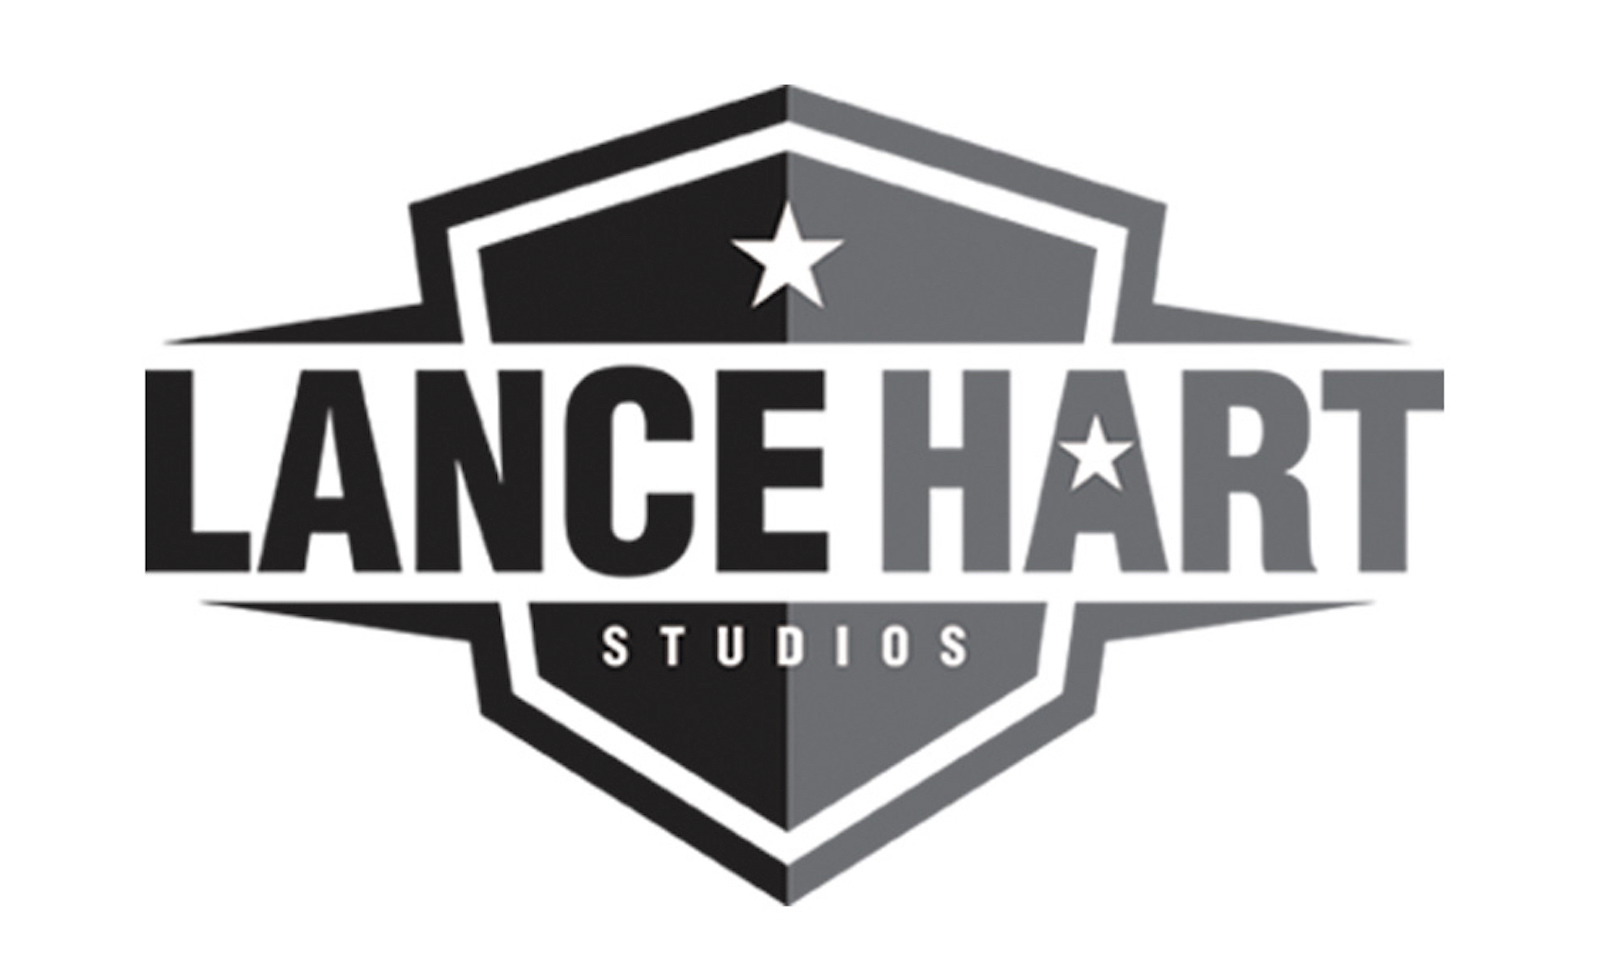 Lance Hart Studios to Debut Inaugural Gay Title This Week